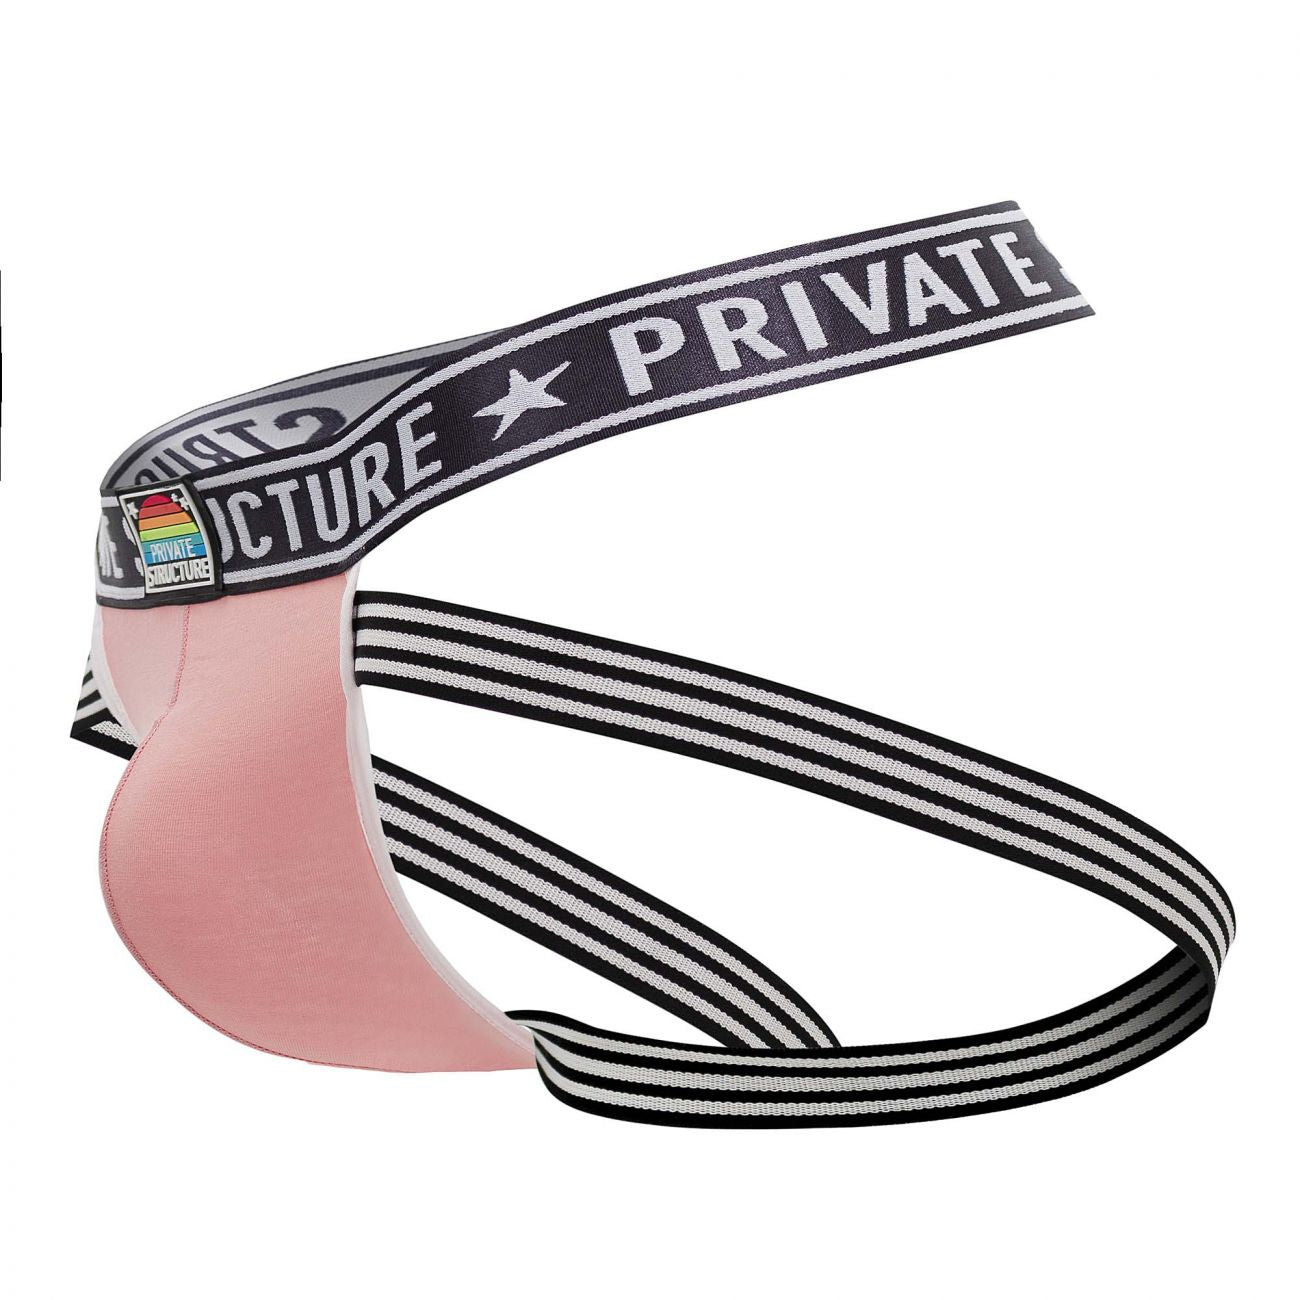 Private Structure EPUY4004 Pride Jockstraps Lemonade Pink